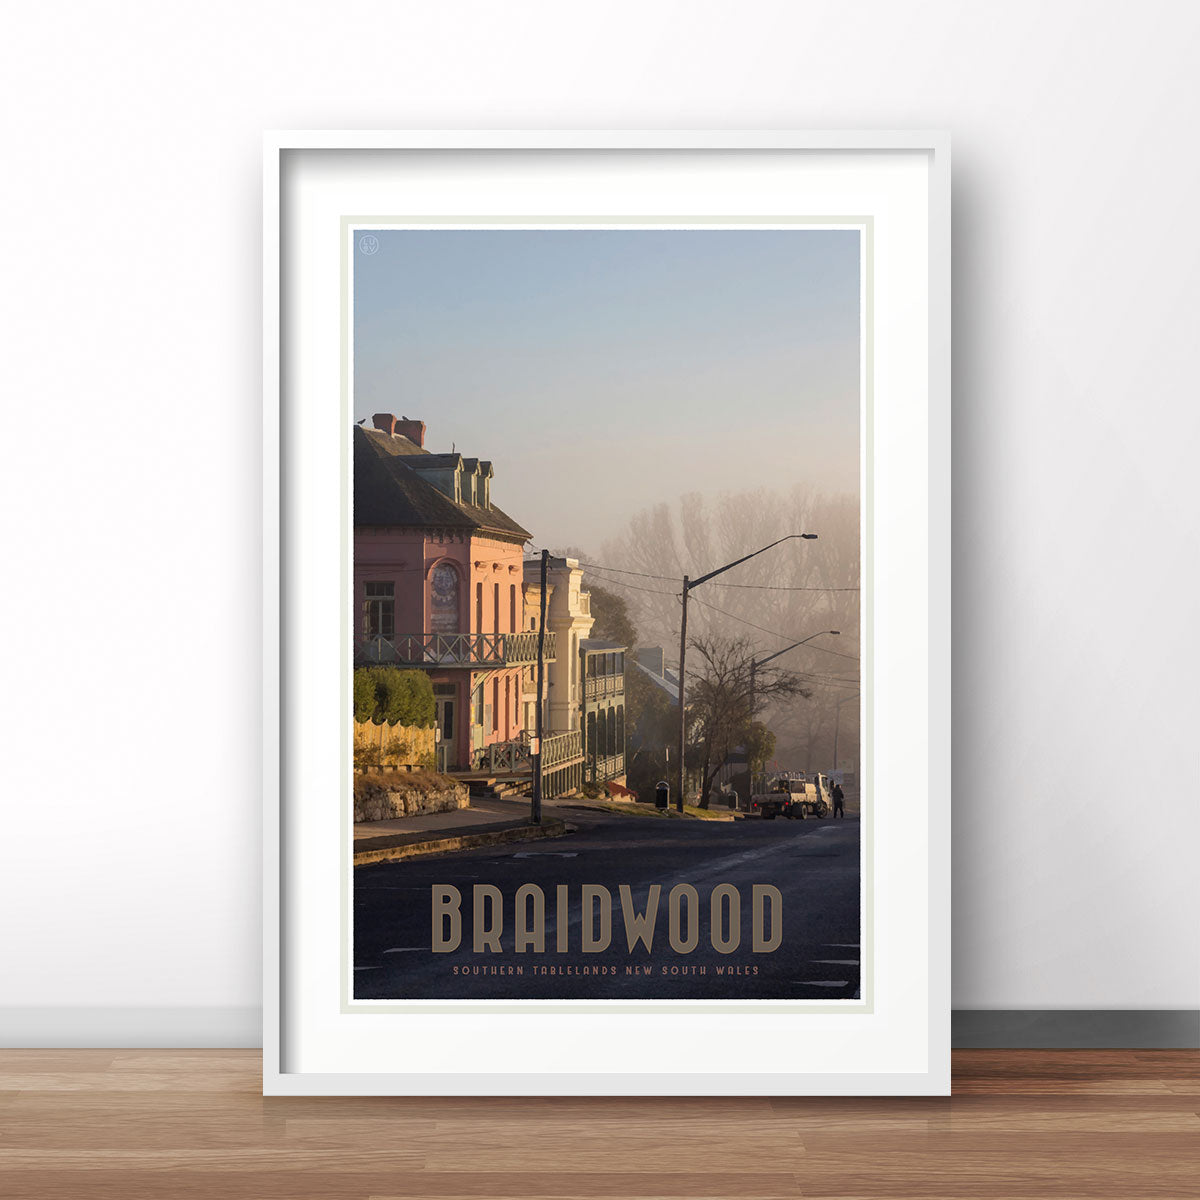 Braidwood Street vintage travel style poster. Original design Places We Luv